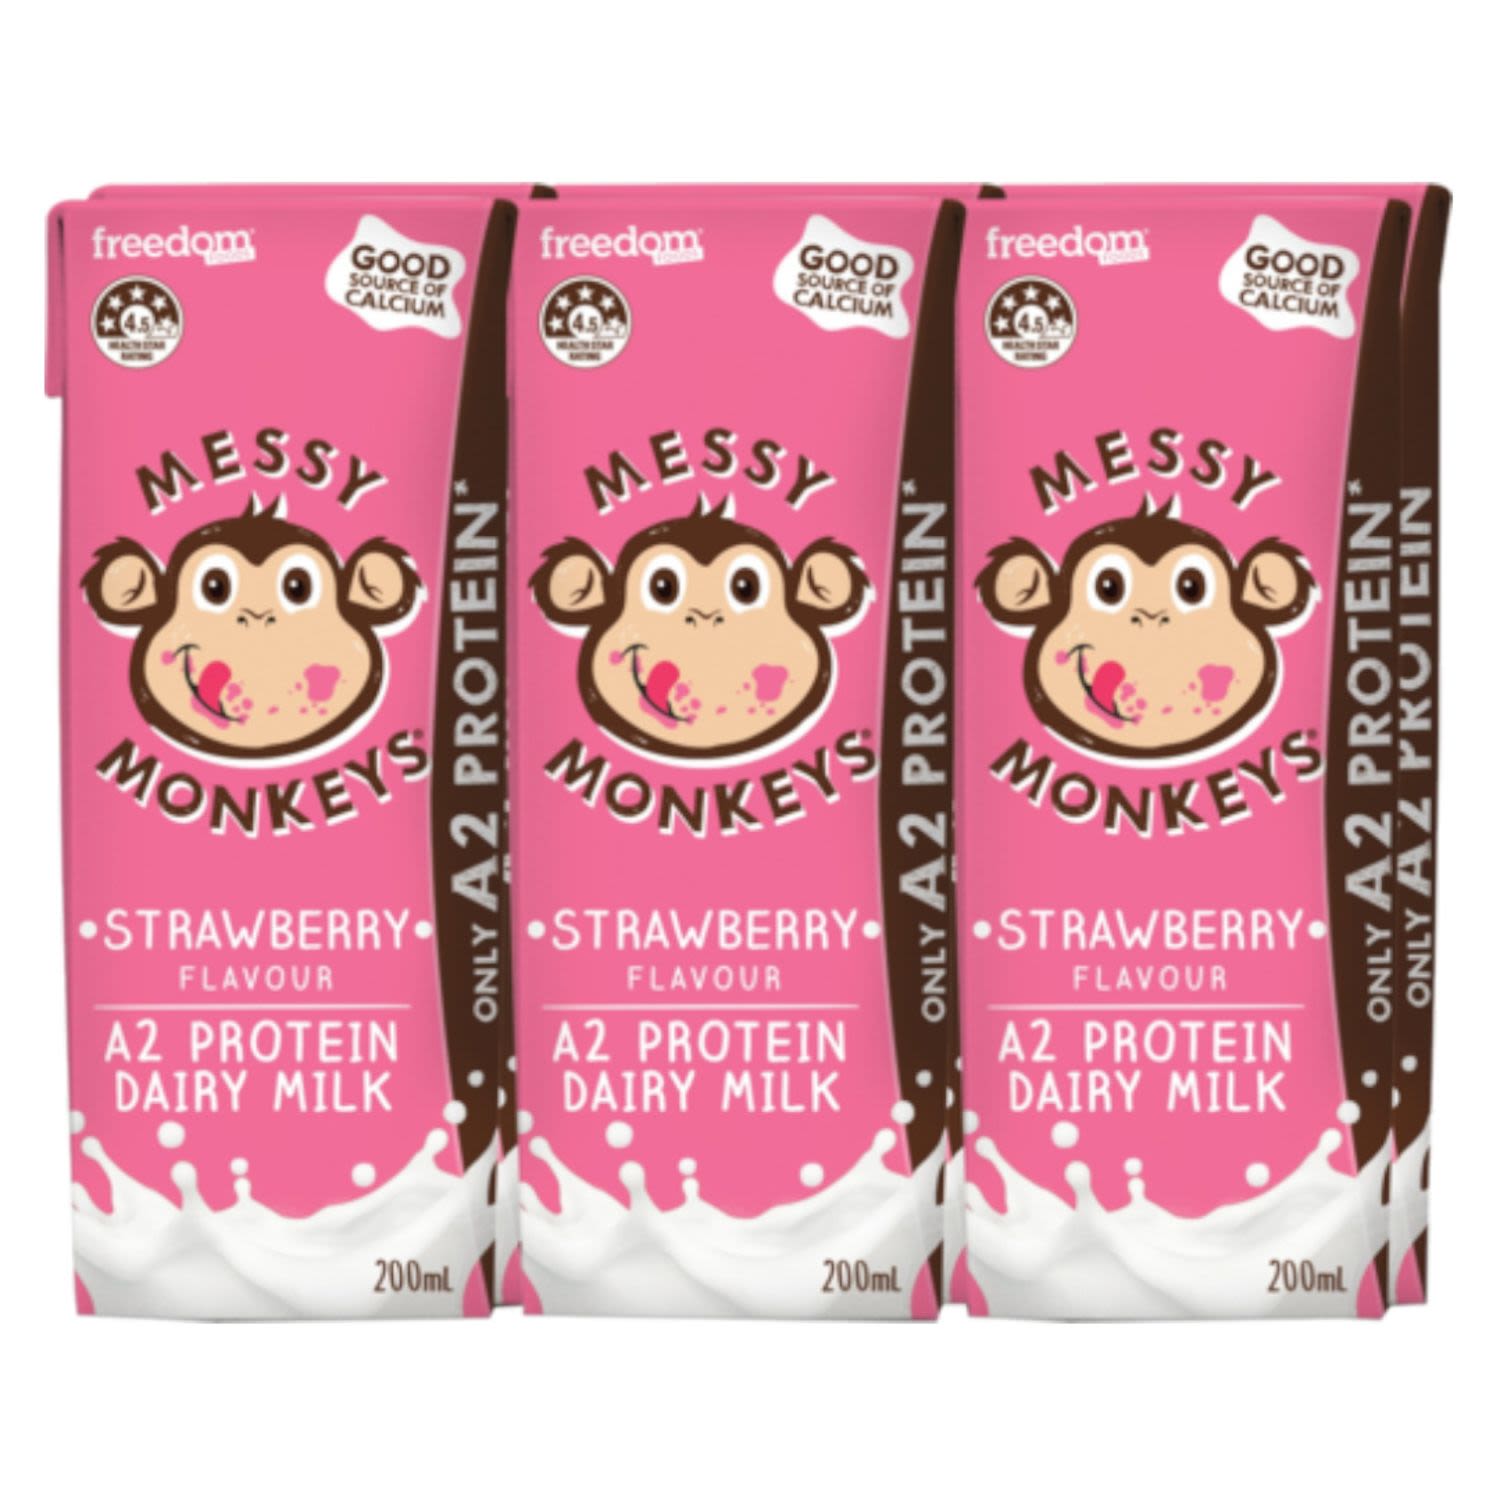 Freedom Foods Messy Monkeys Strawberry A2 Protein Milk, 6 Each